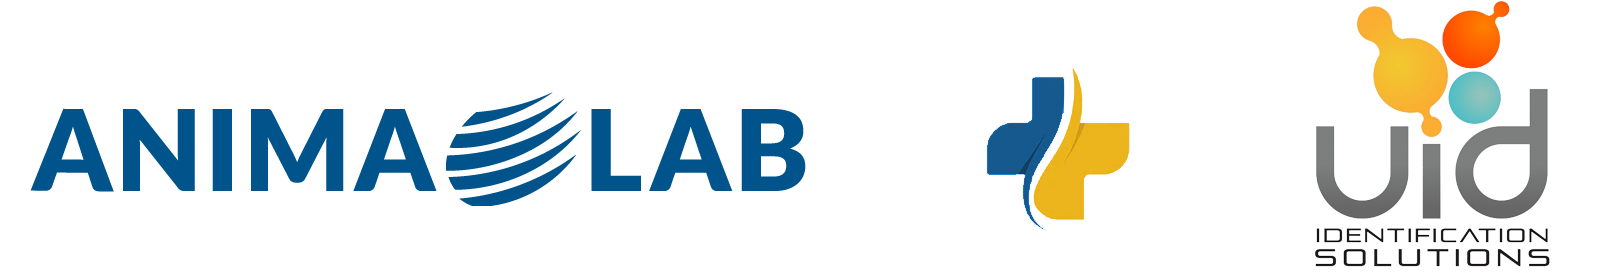 https://uidevice.eu/wp-content/uploads/2022/03/logo_uid_animalab2.png